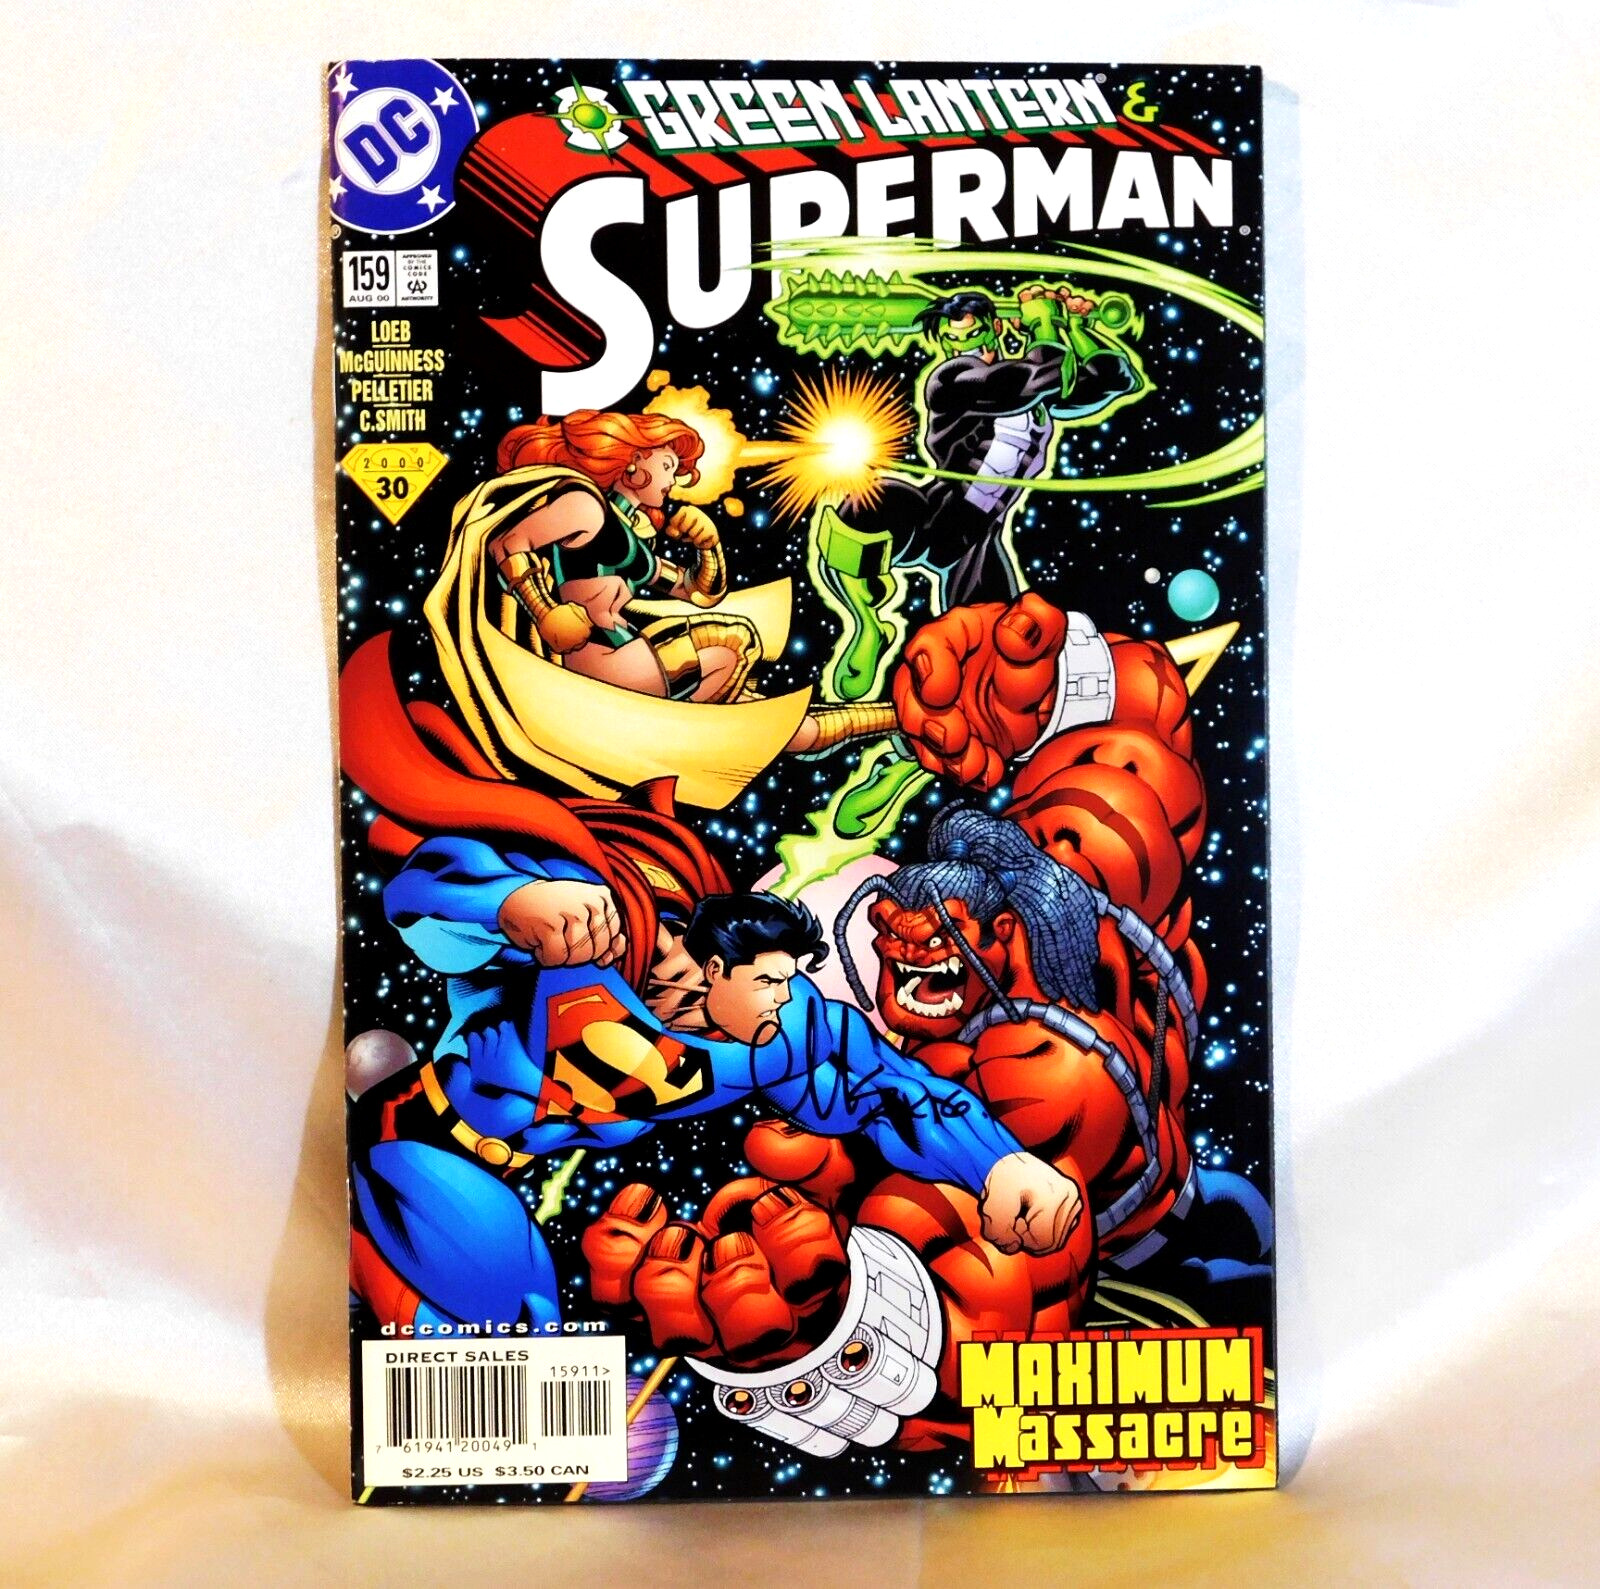 SUPERMAN #159 MASSACRE SIGNED BY ARTIST ED McGUINNESS